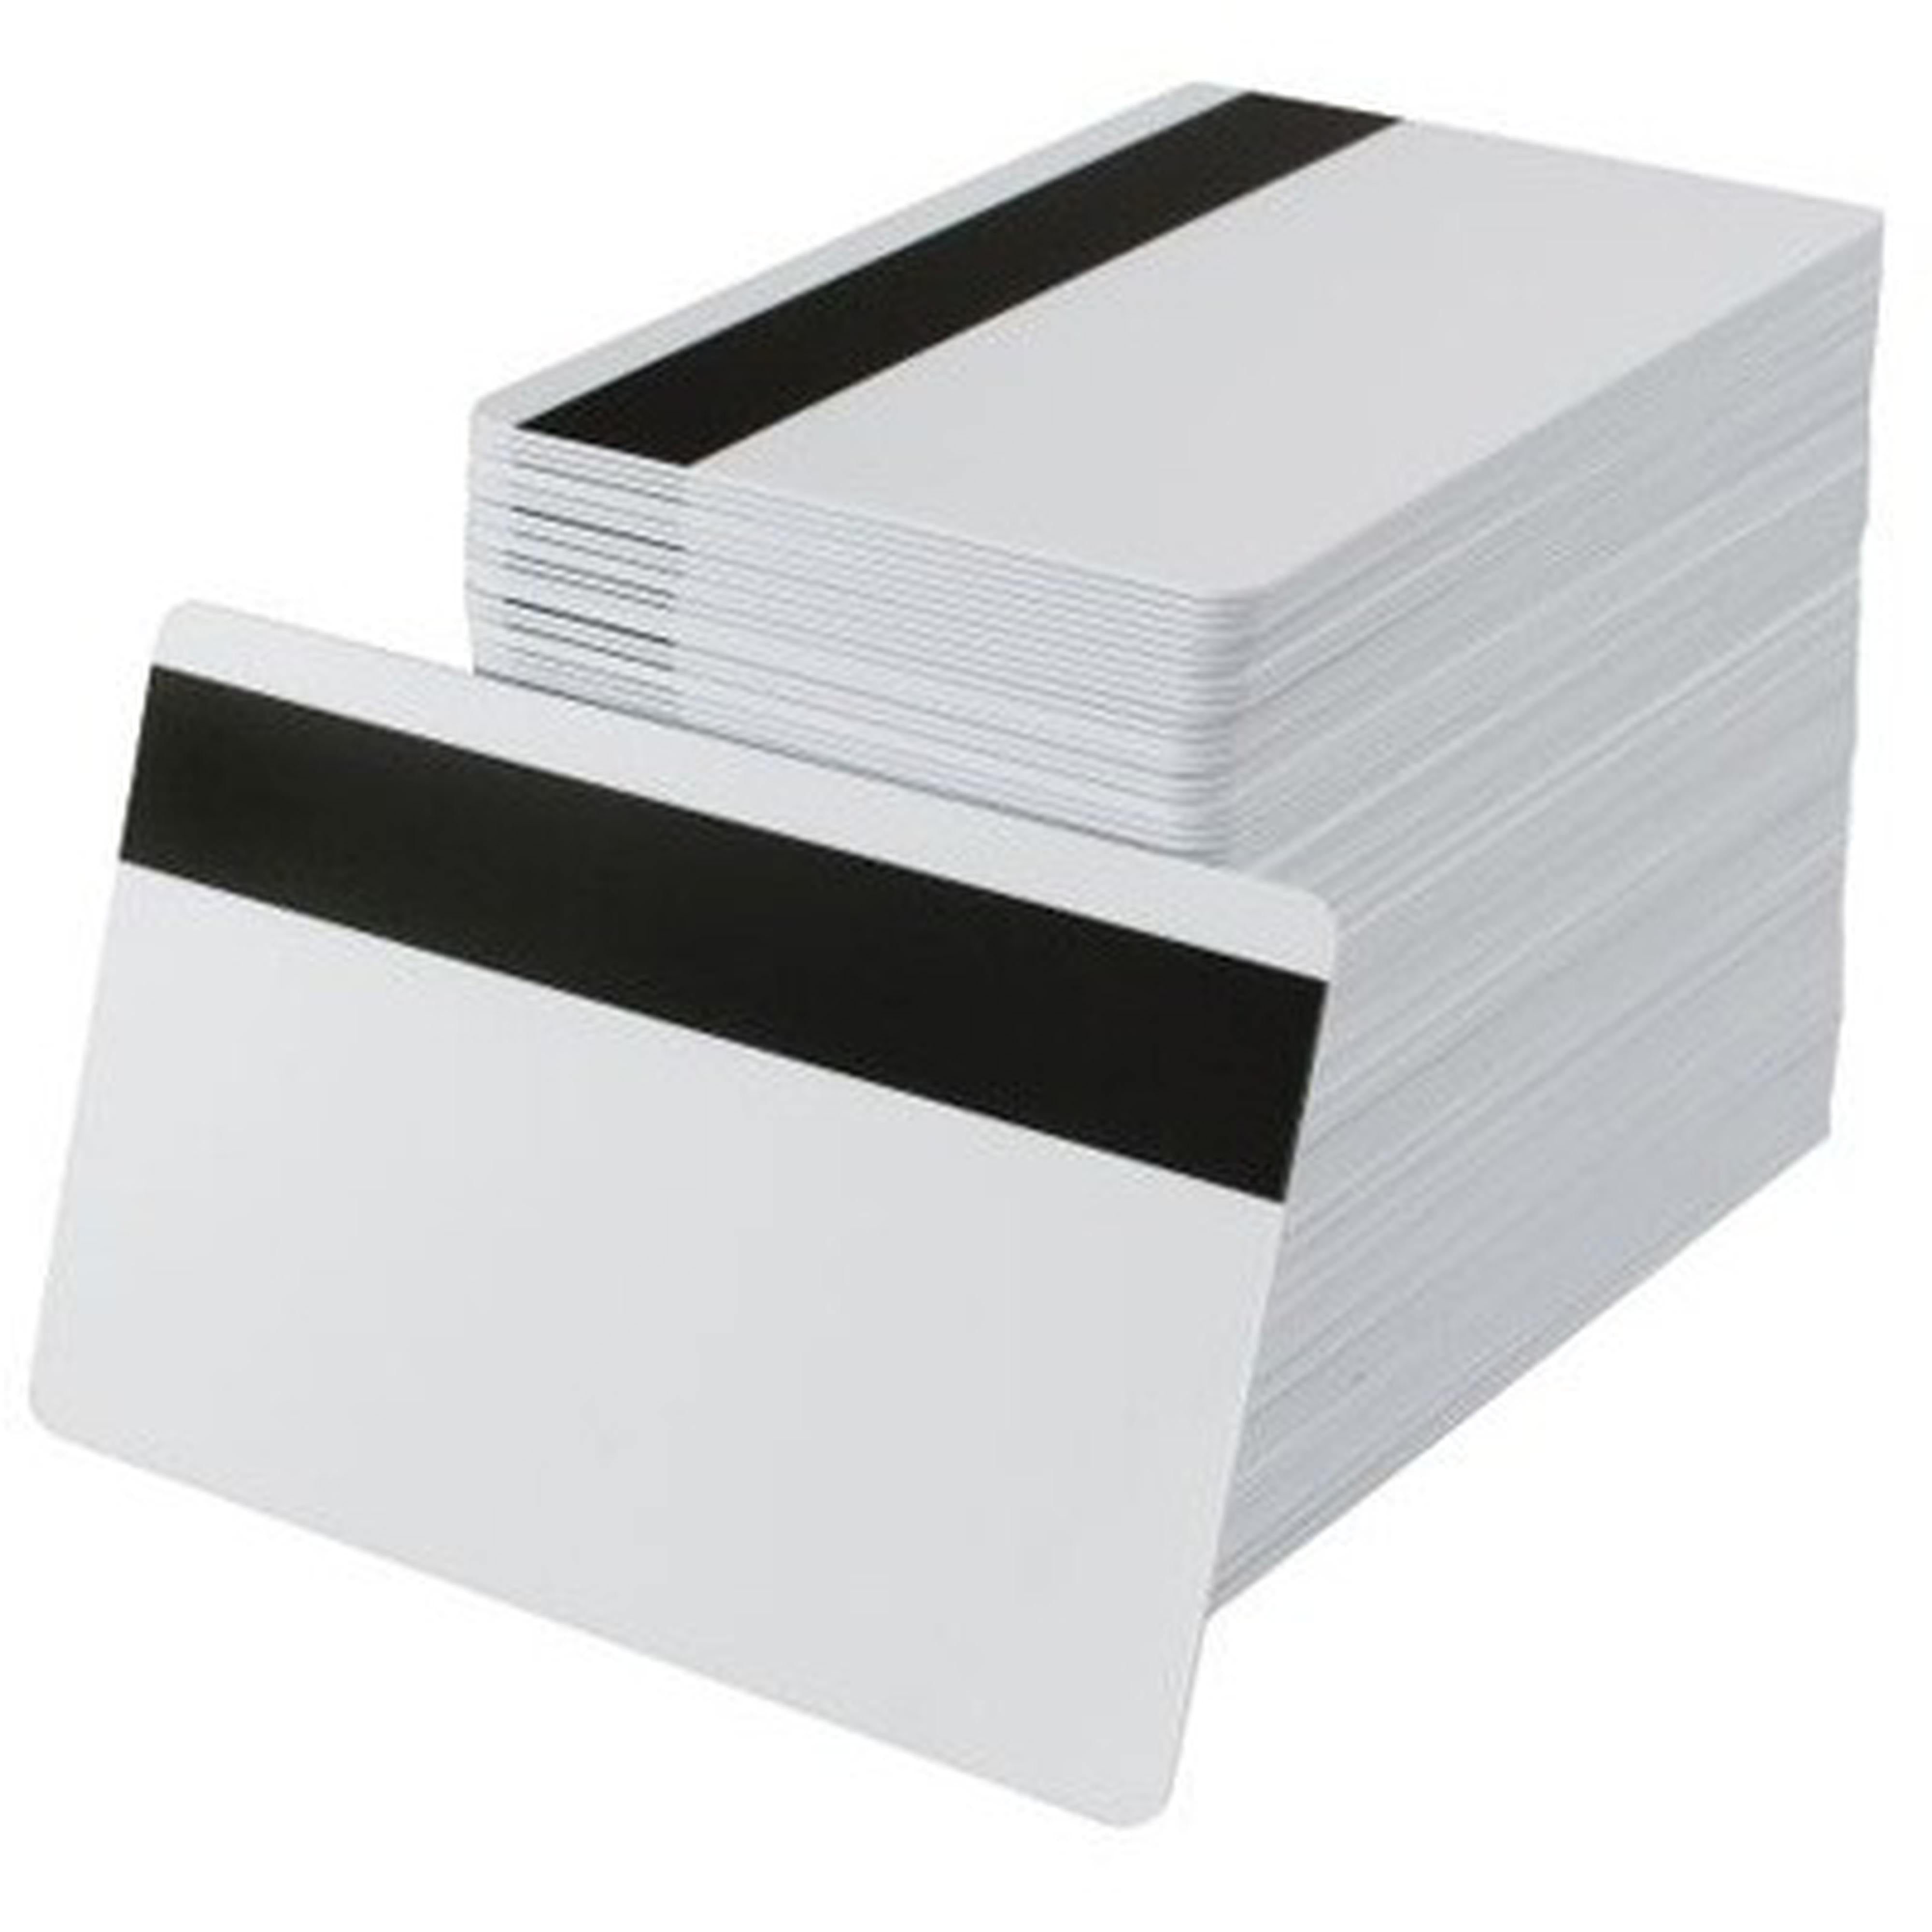 30 mil 60/40 Composite PVC PET Smart Card with Magnetic Stripe (CR80/C